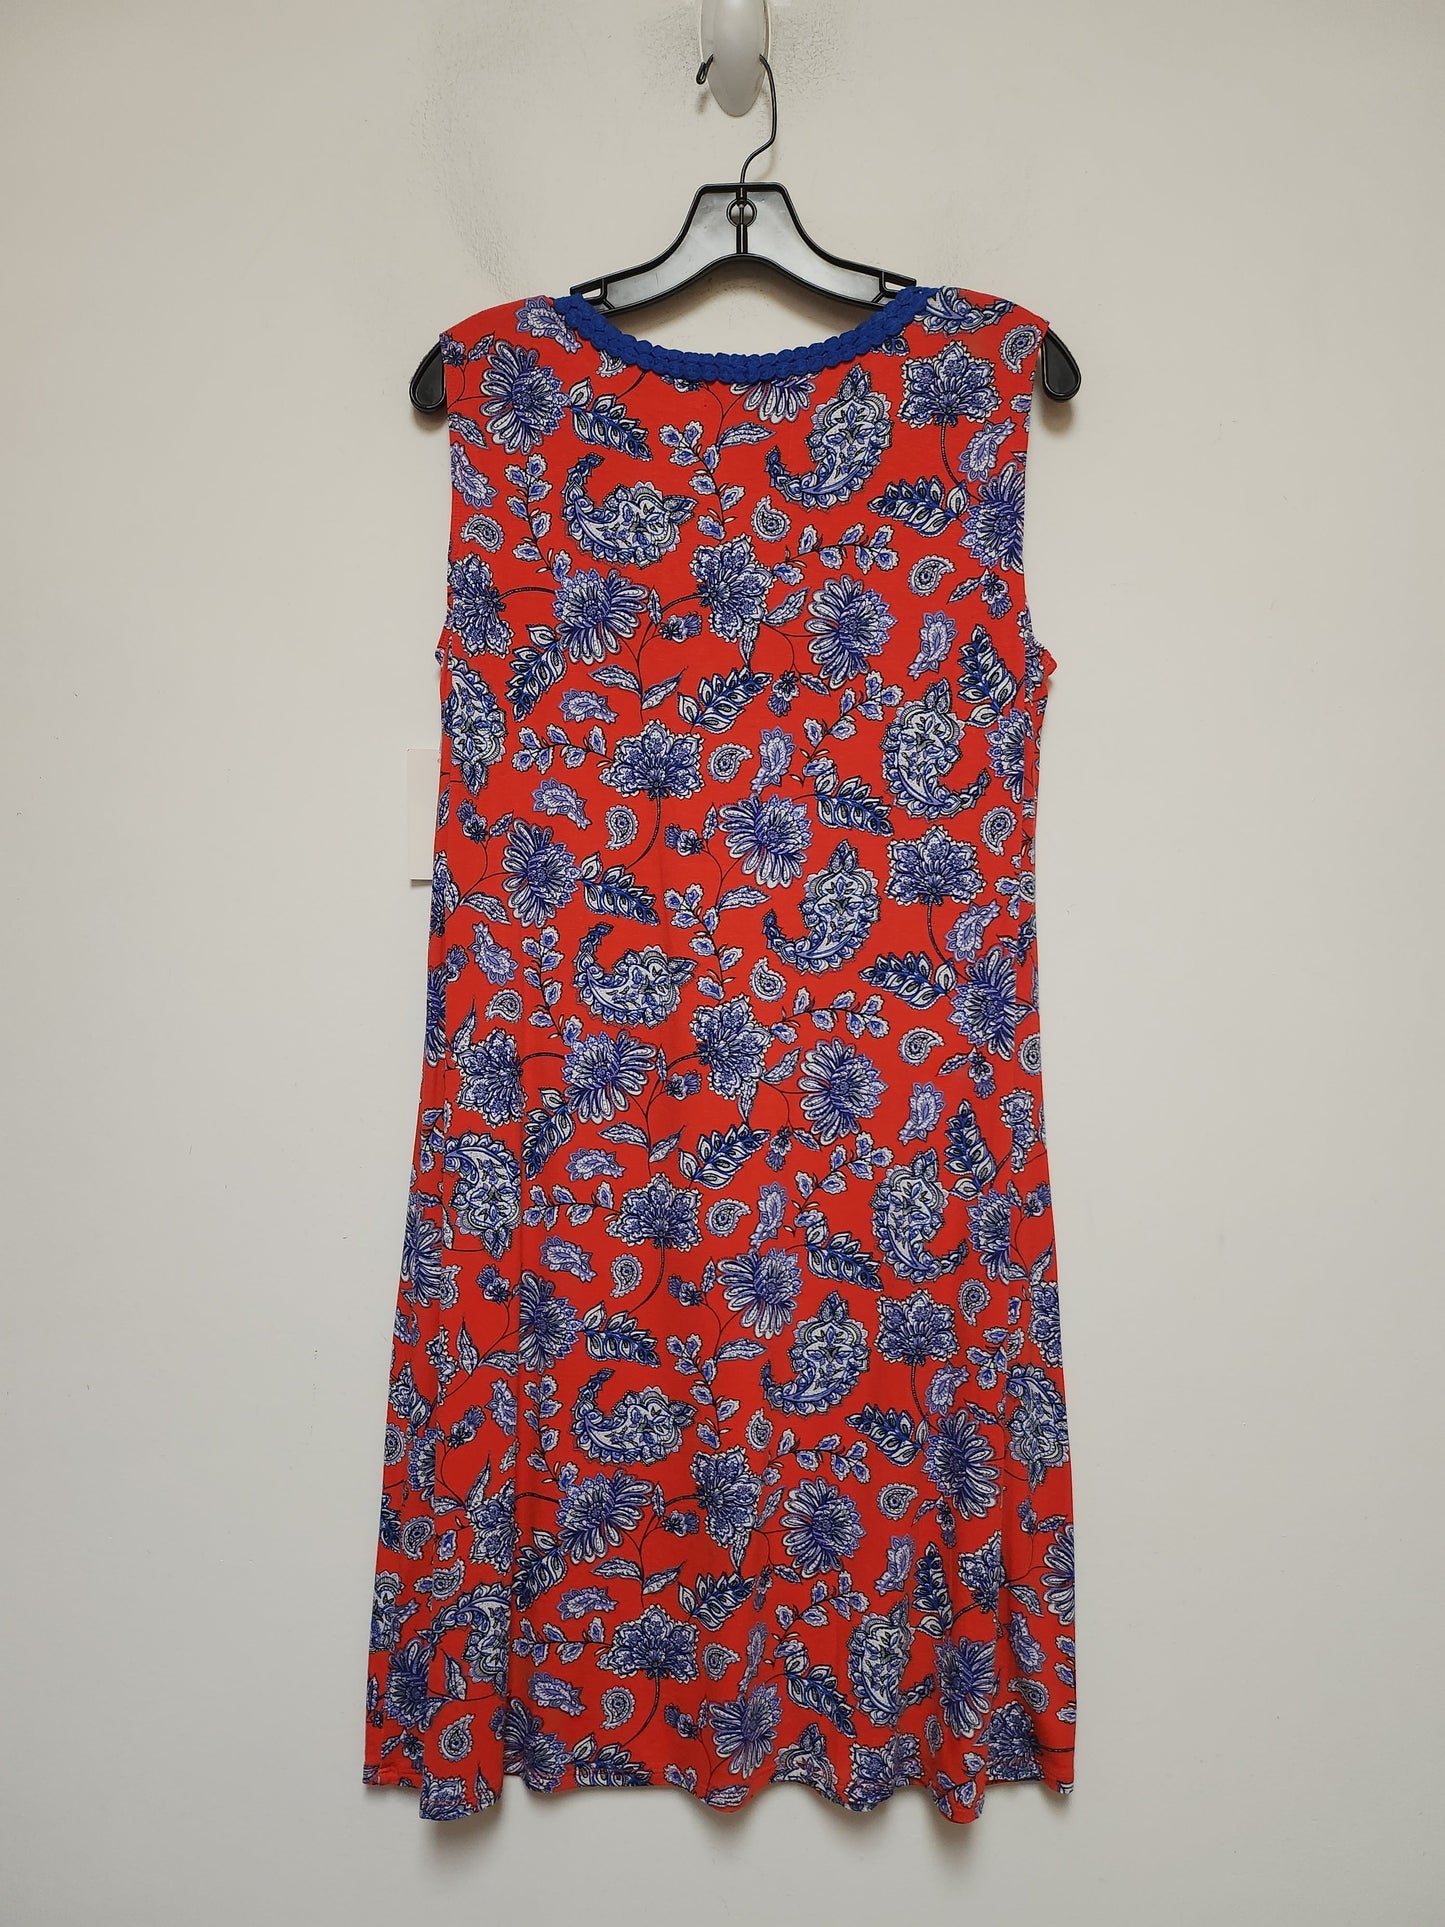 Blue & Red Dress Casual Short Harper, Size M